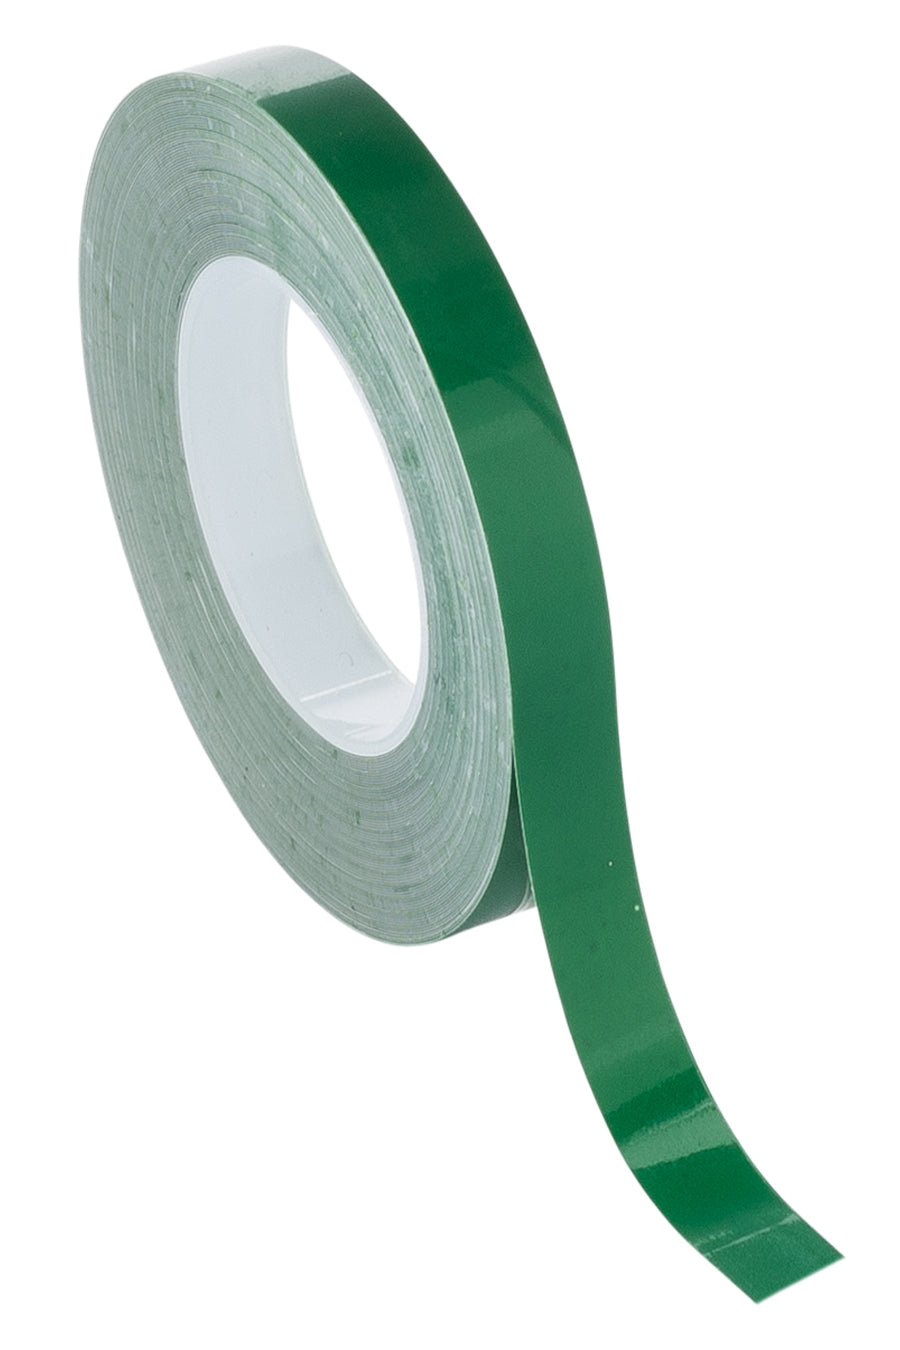 1/4" x 324" Green Glossy Tape